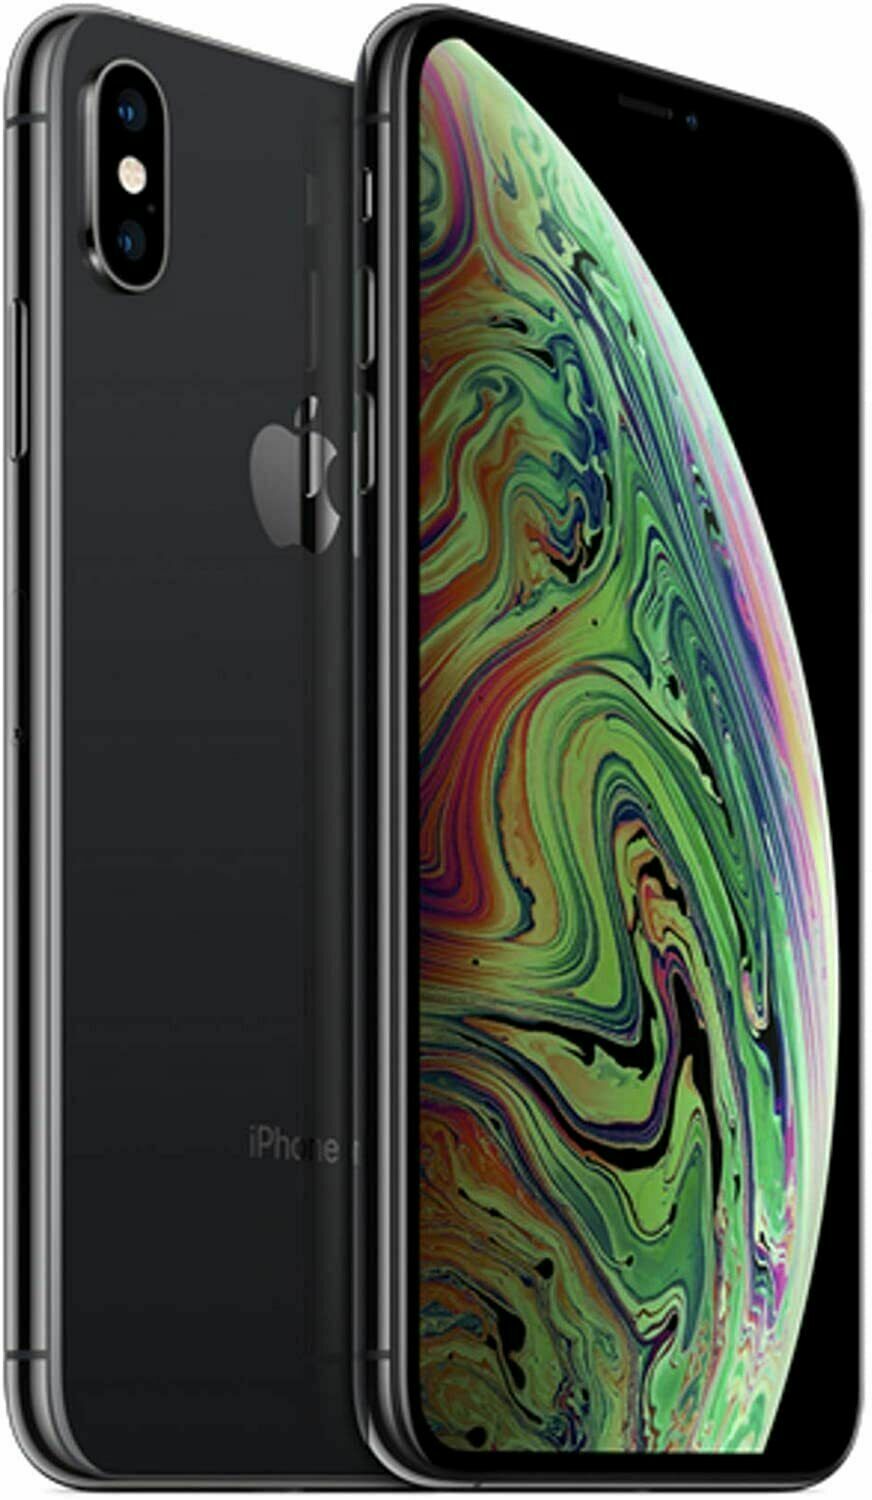 Apple iPhone XS Max 64GB Space Gray A1921 Unlocked Verizon T-mobile Sprint